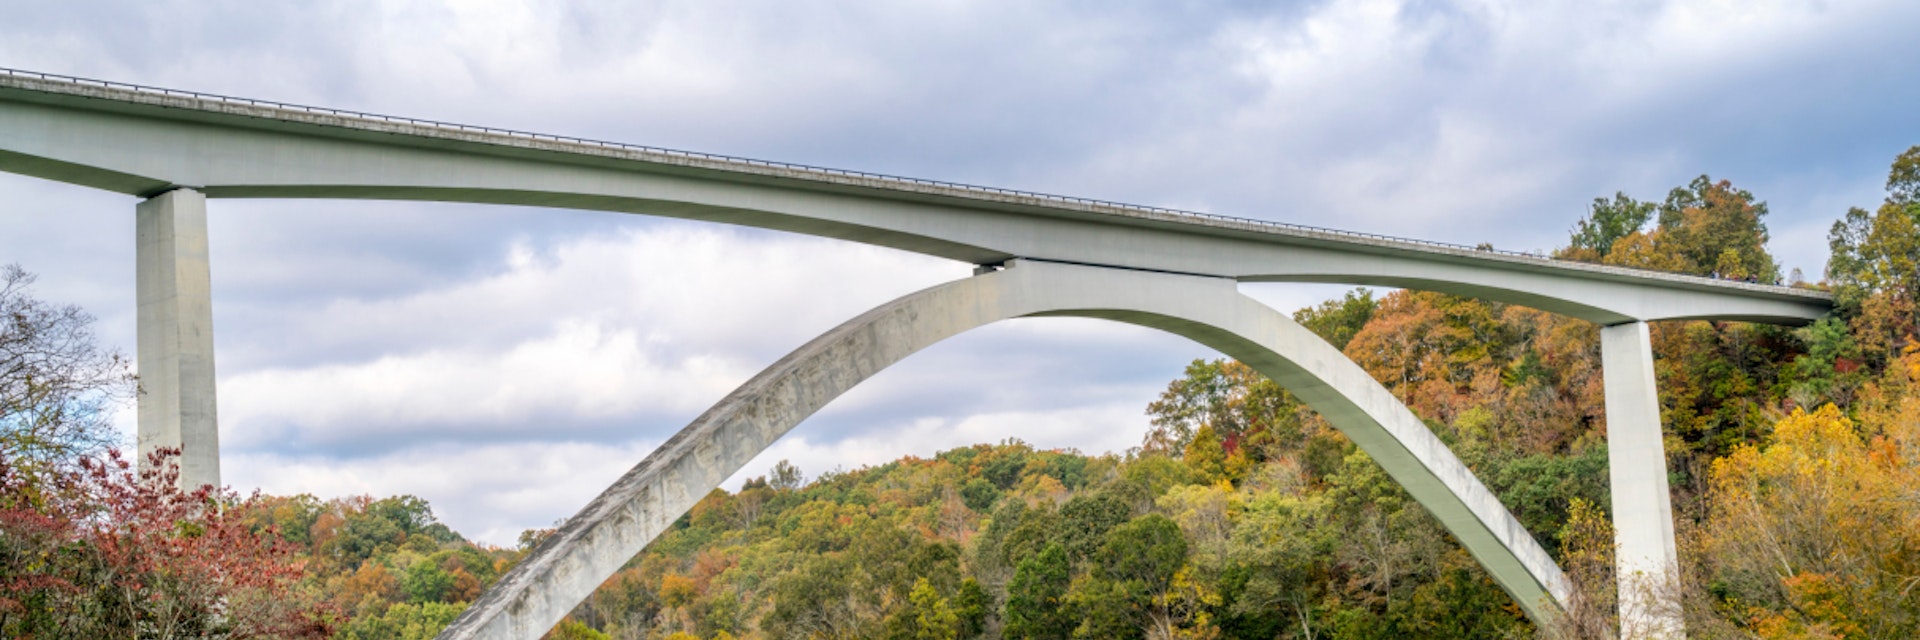 Double Arch Bridge at Natchez Trace Parkway near Franklin, TN